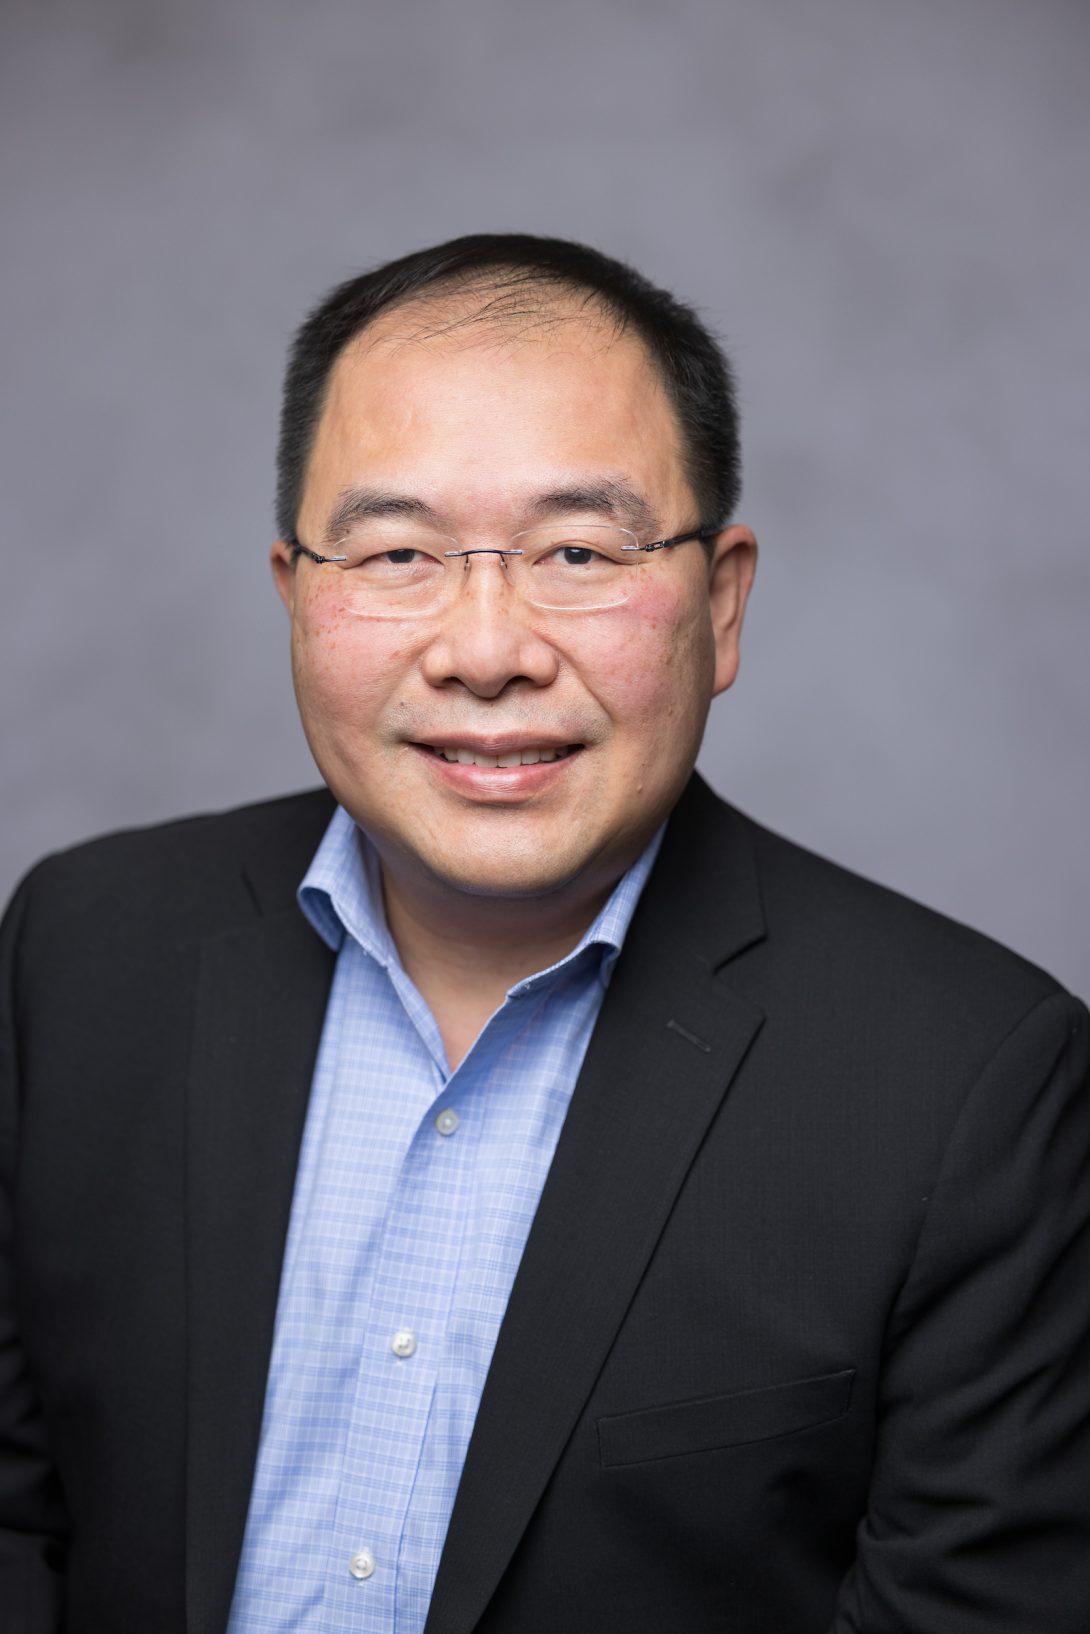 Dr. Phimon Atsawasuwan, Associate Professor in the Department of Orthodontics